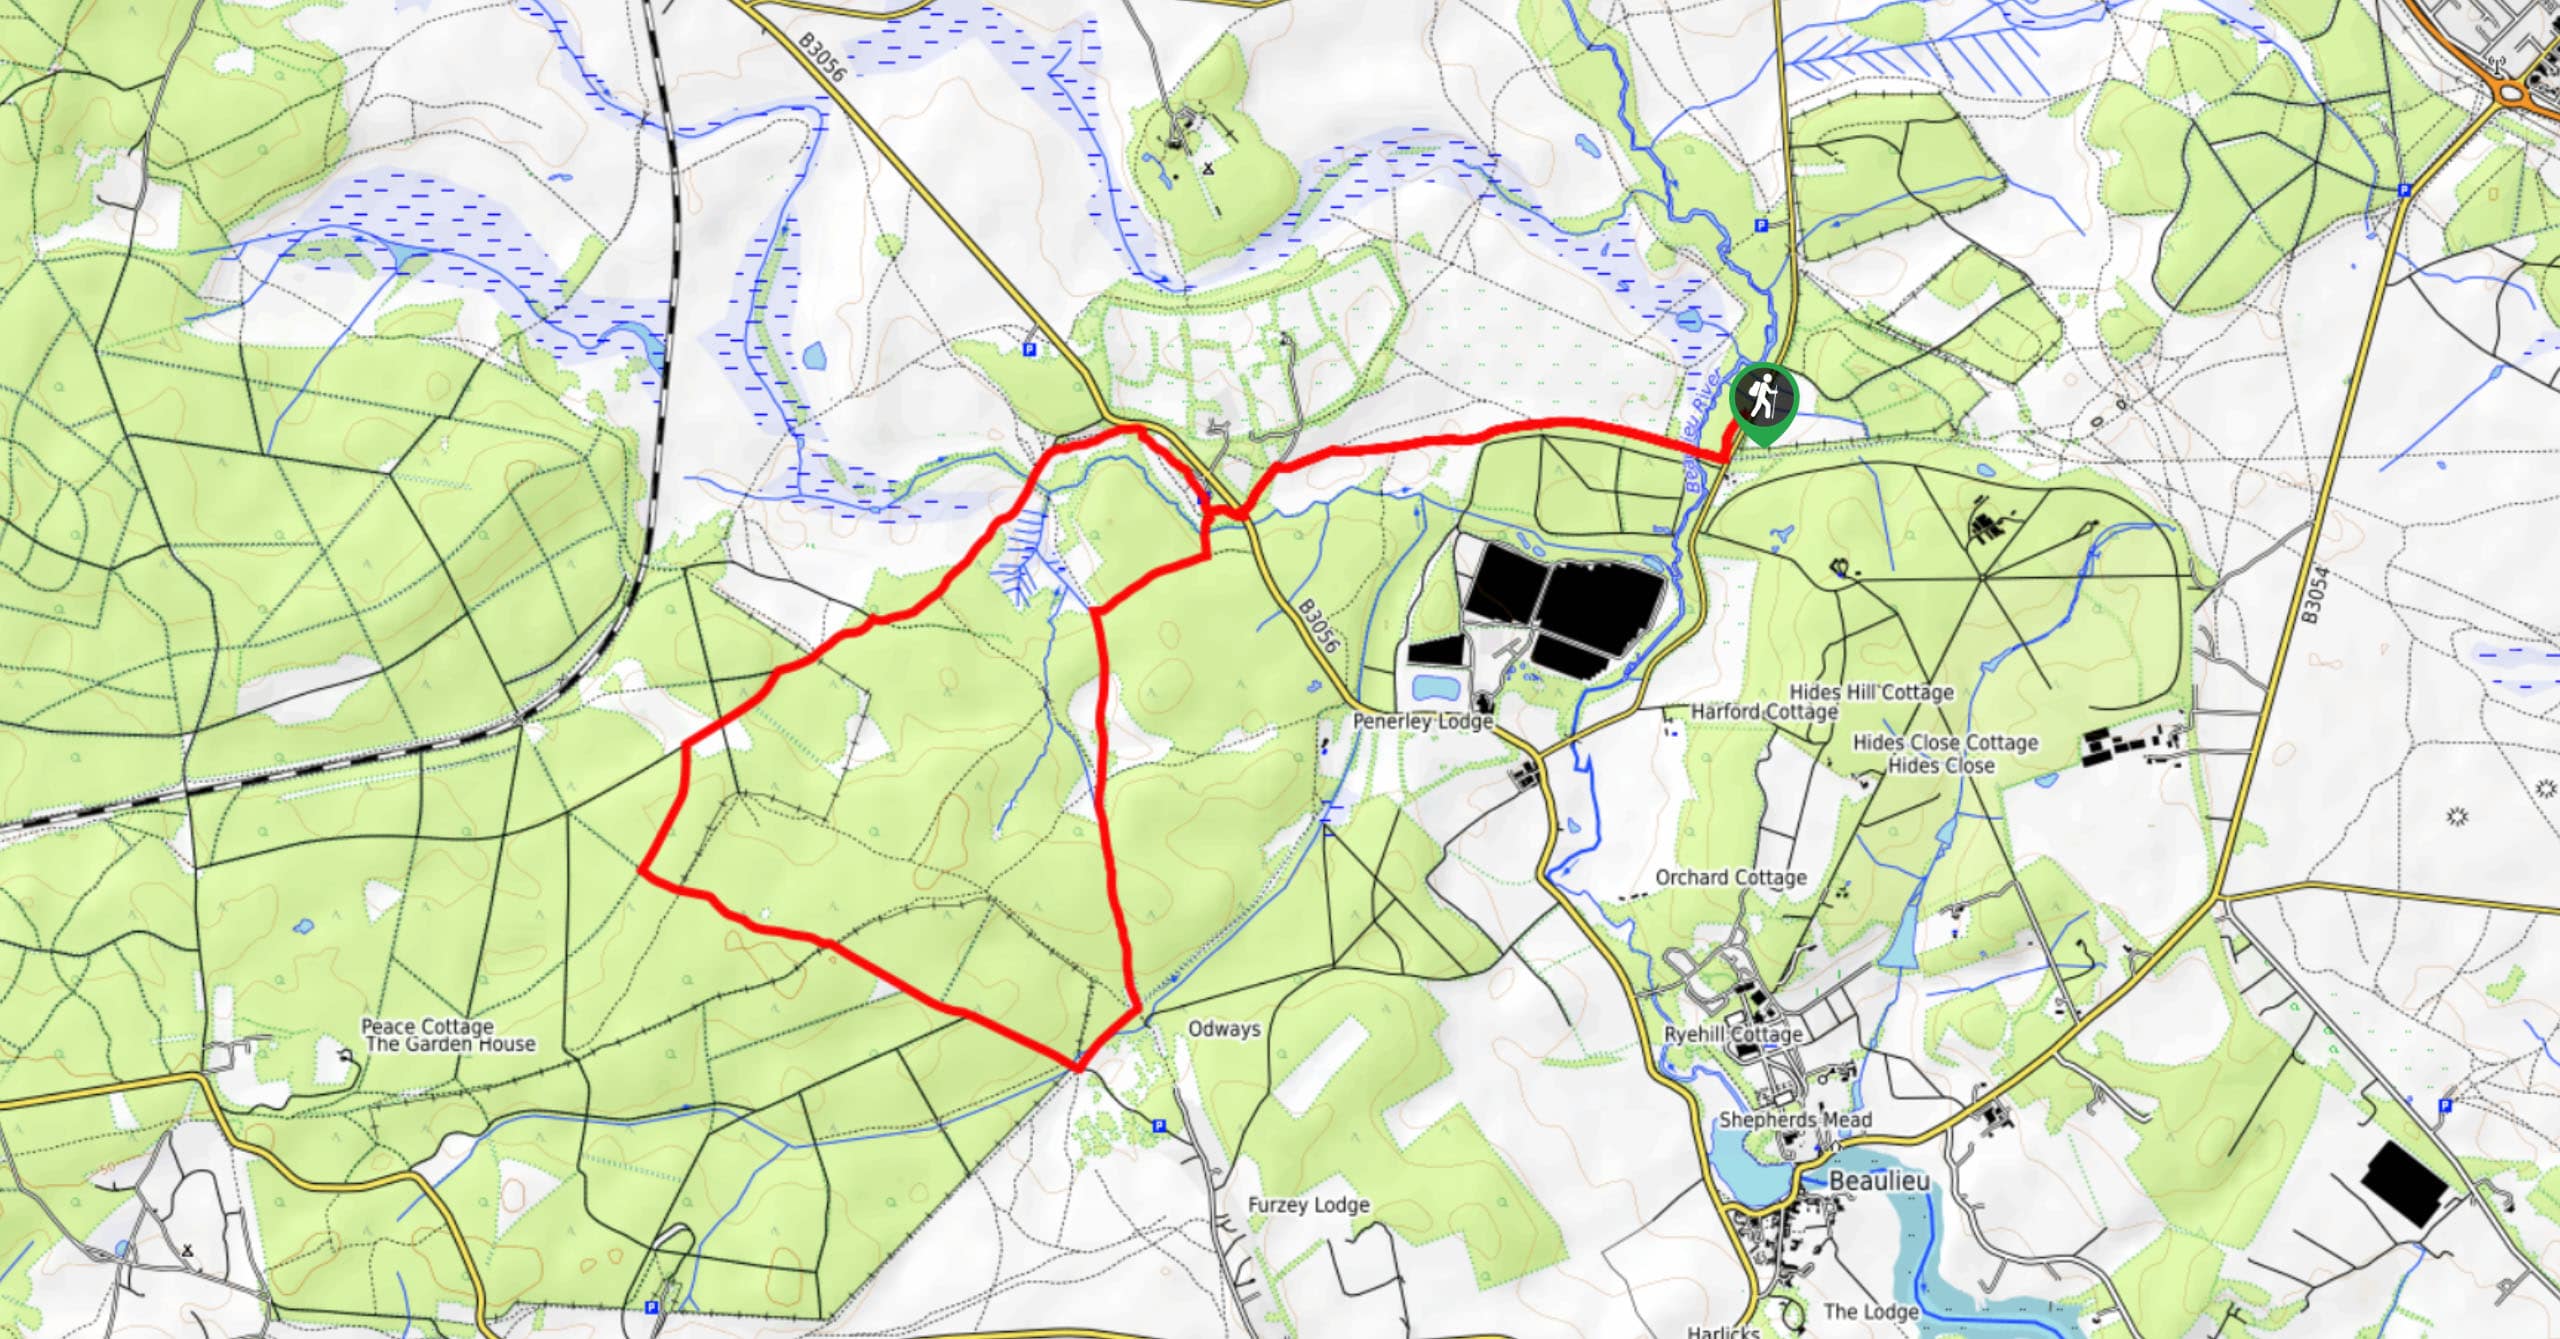 Penerley Wood and Moon Hill Circular Walk Map